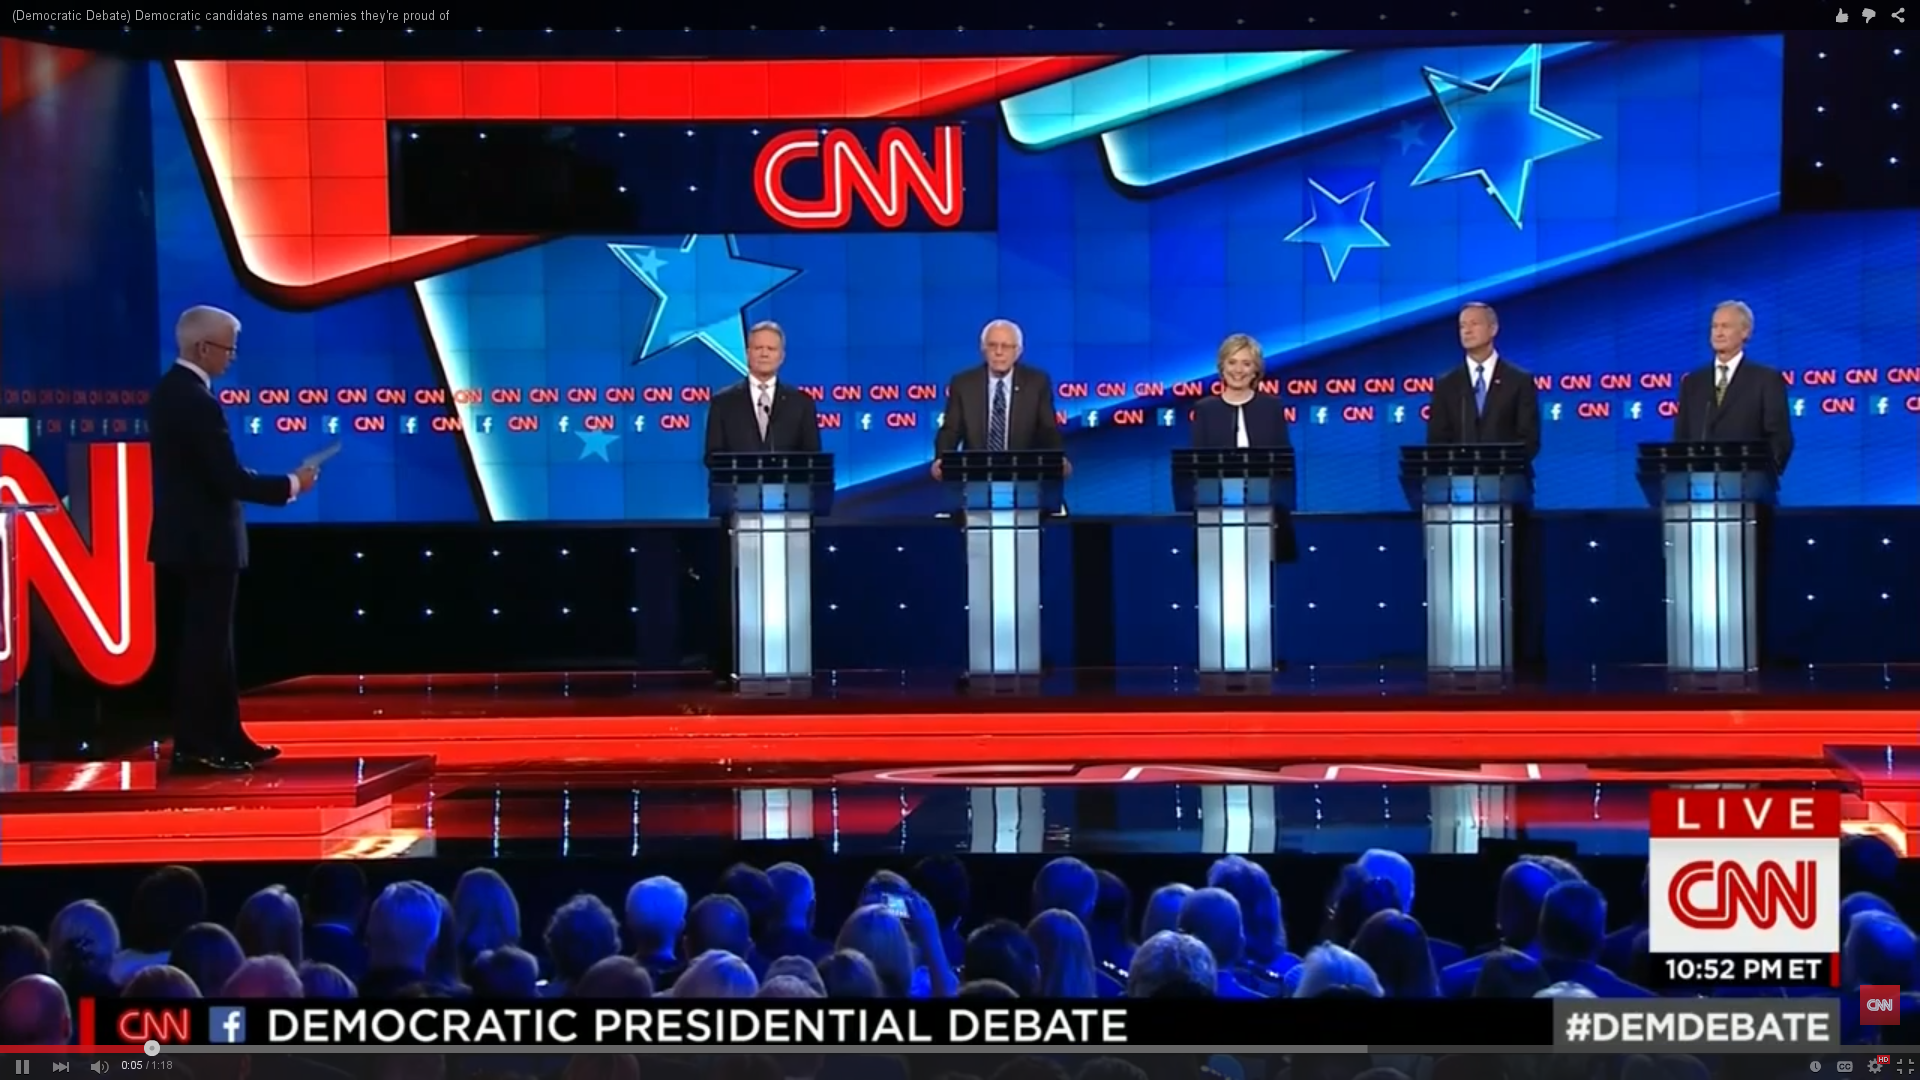 The Democratic presidential candidates debate on CNN